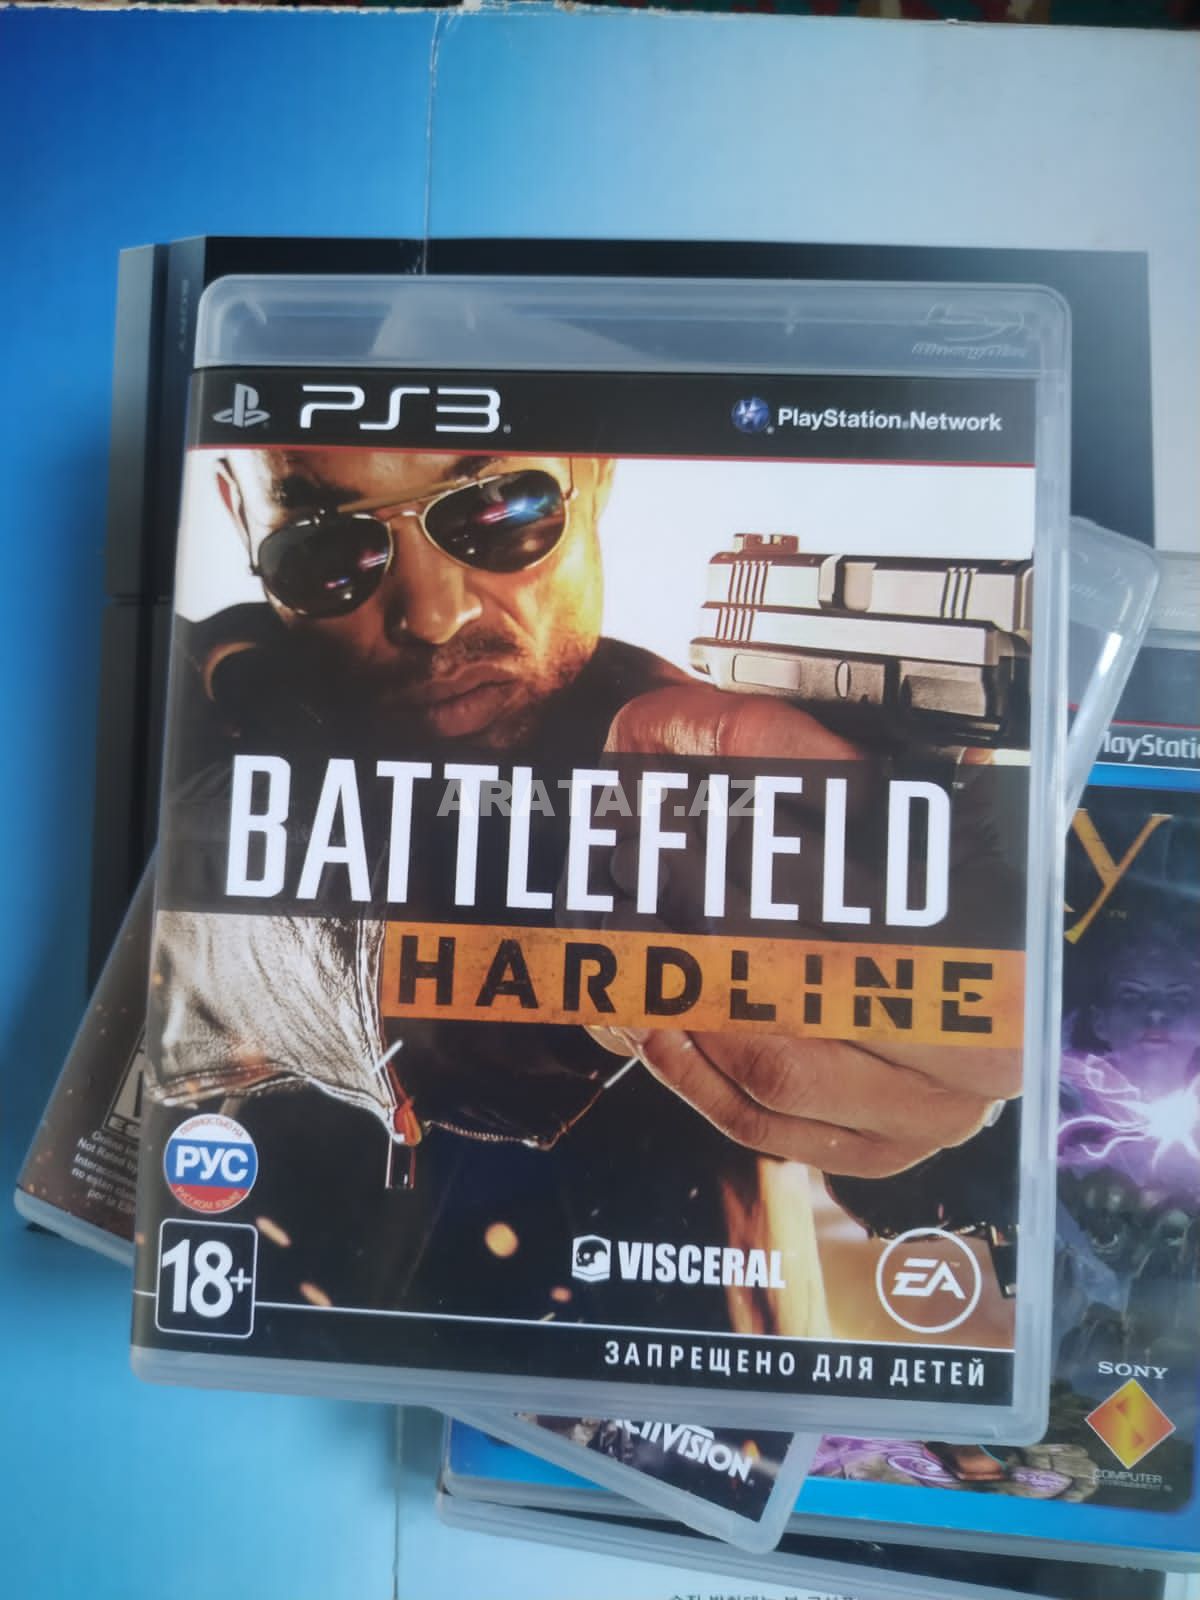 Playstation 3 "BATTLEFIELD HARDLINE" oyun diski